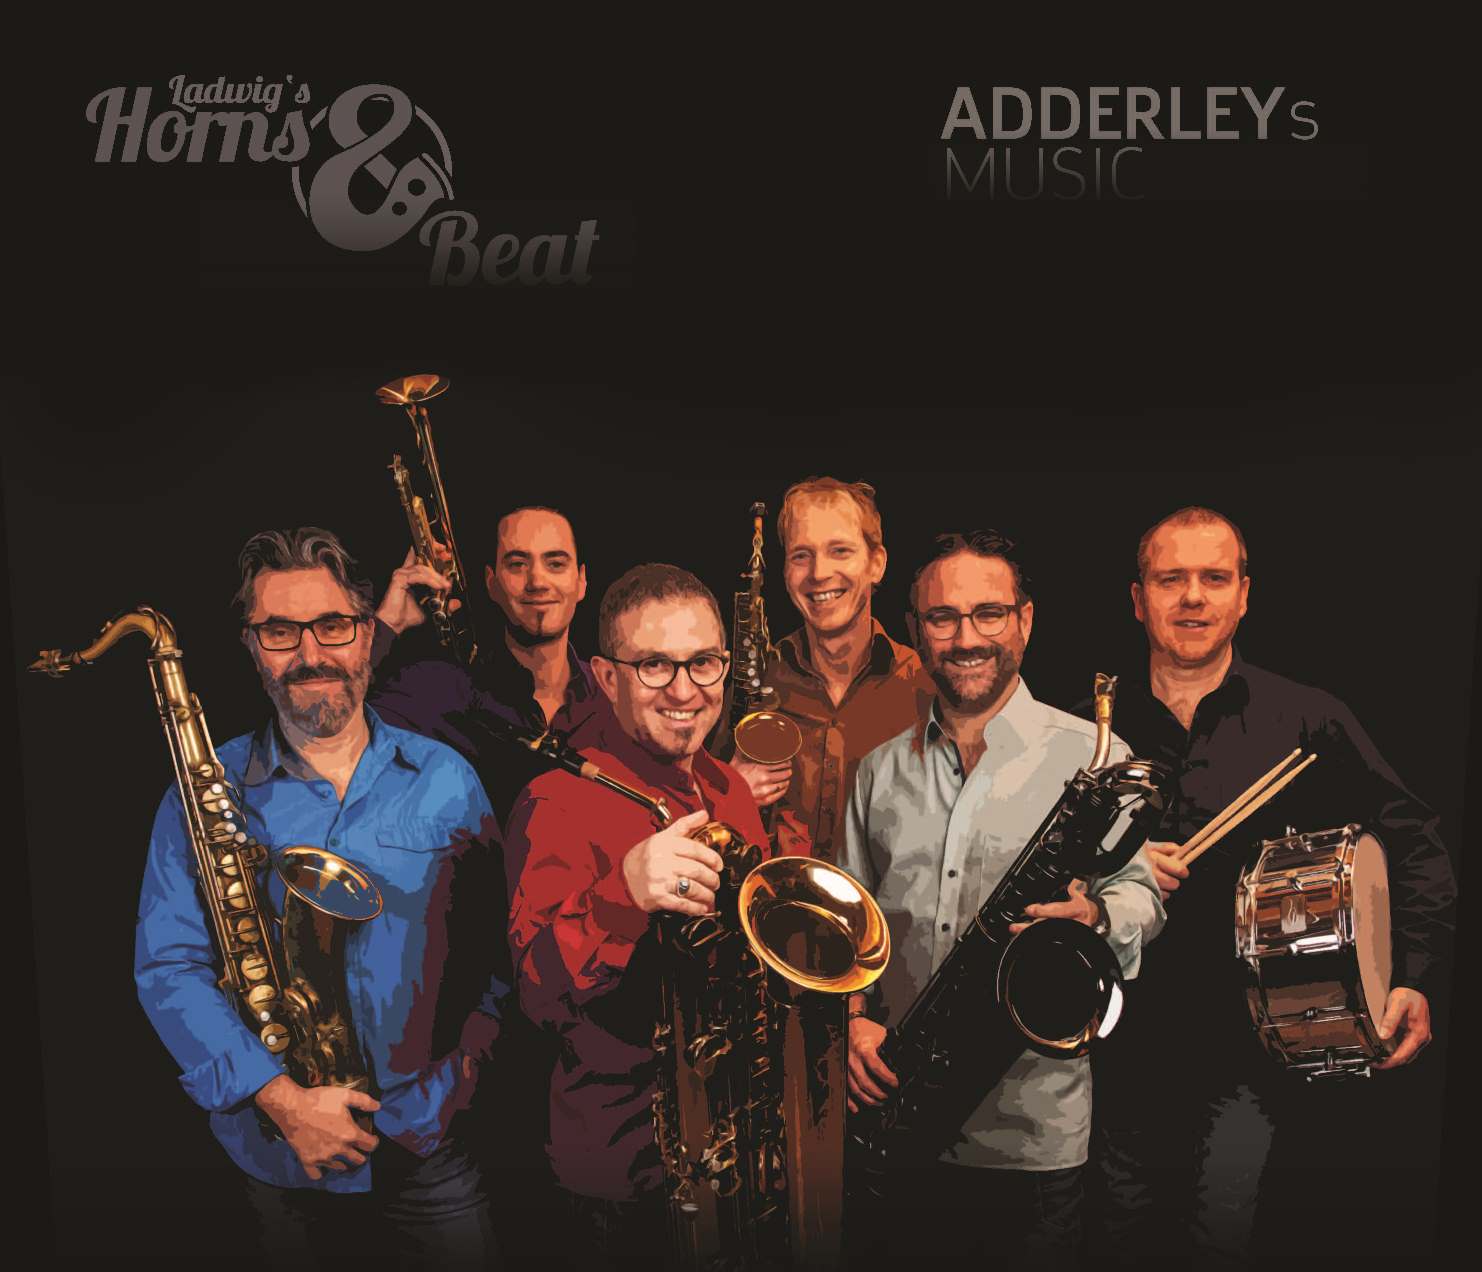 Adderleys Music / Ladwig's HORNS & BEAT